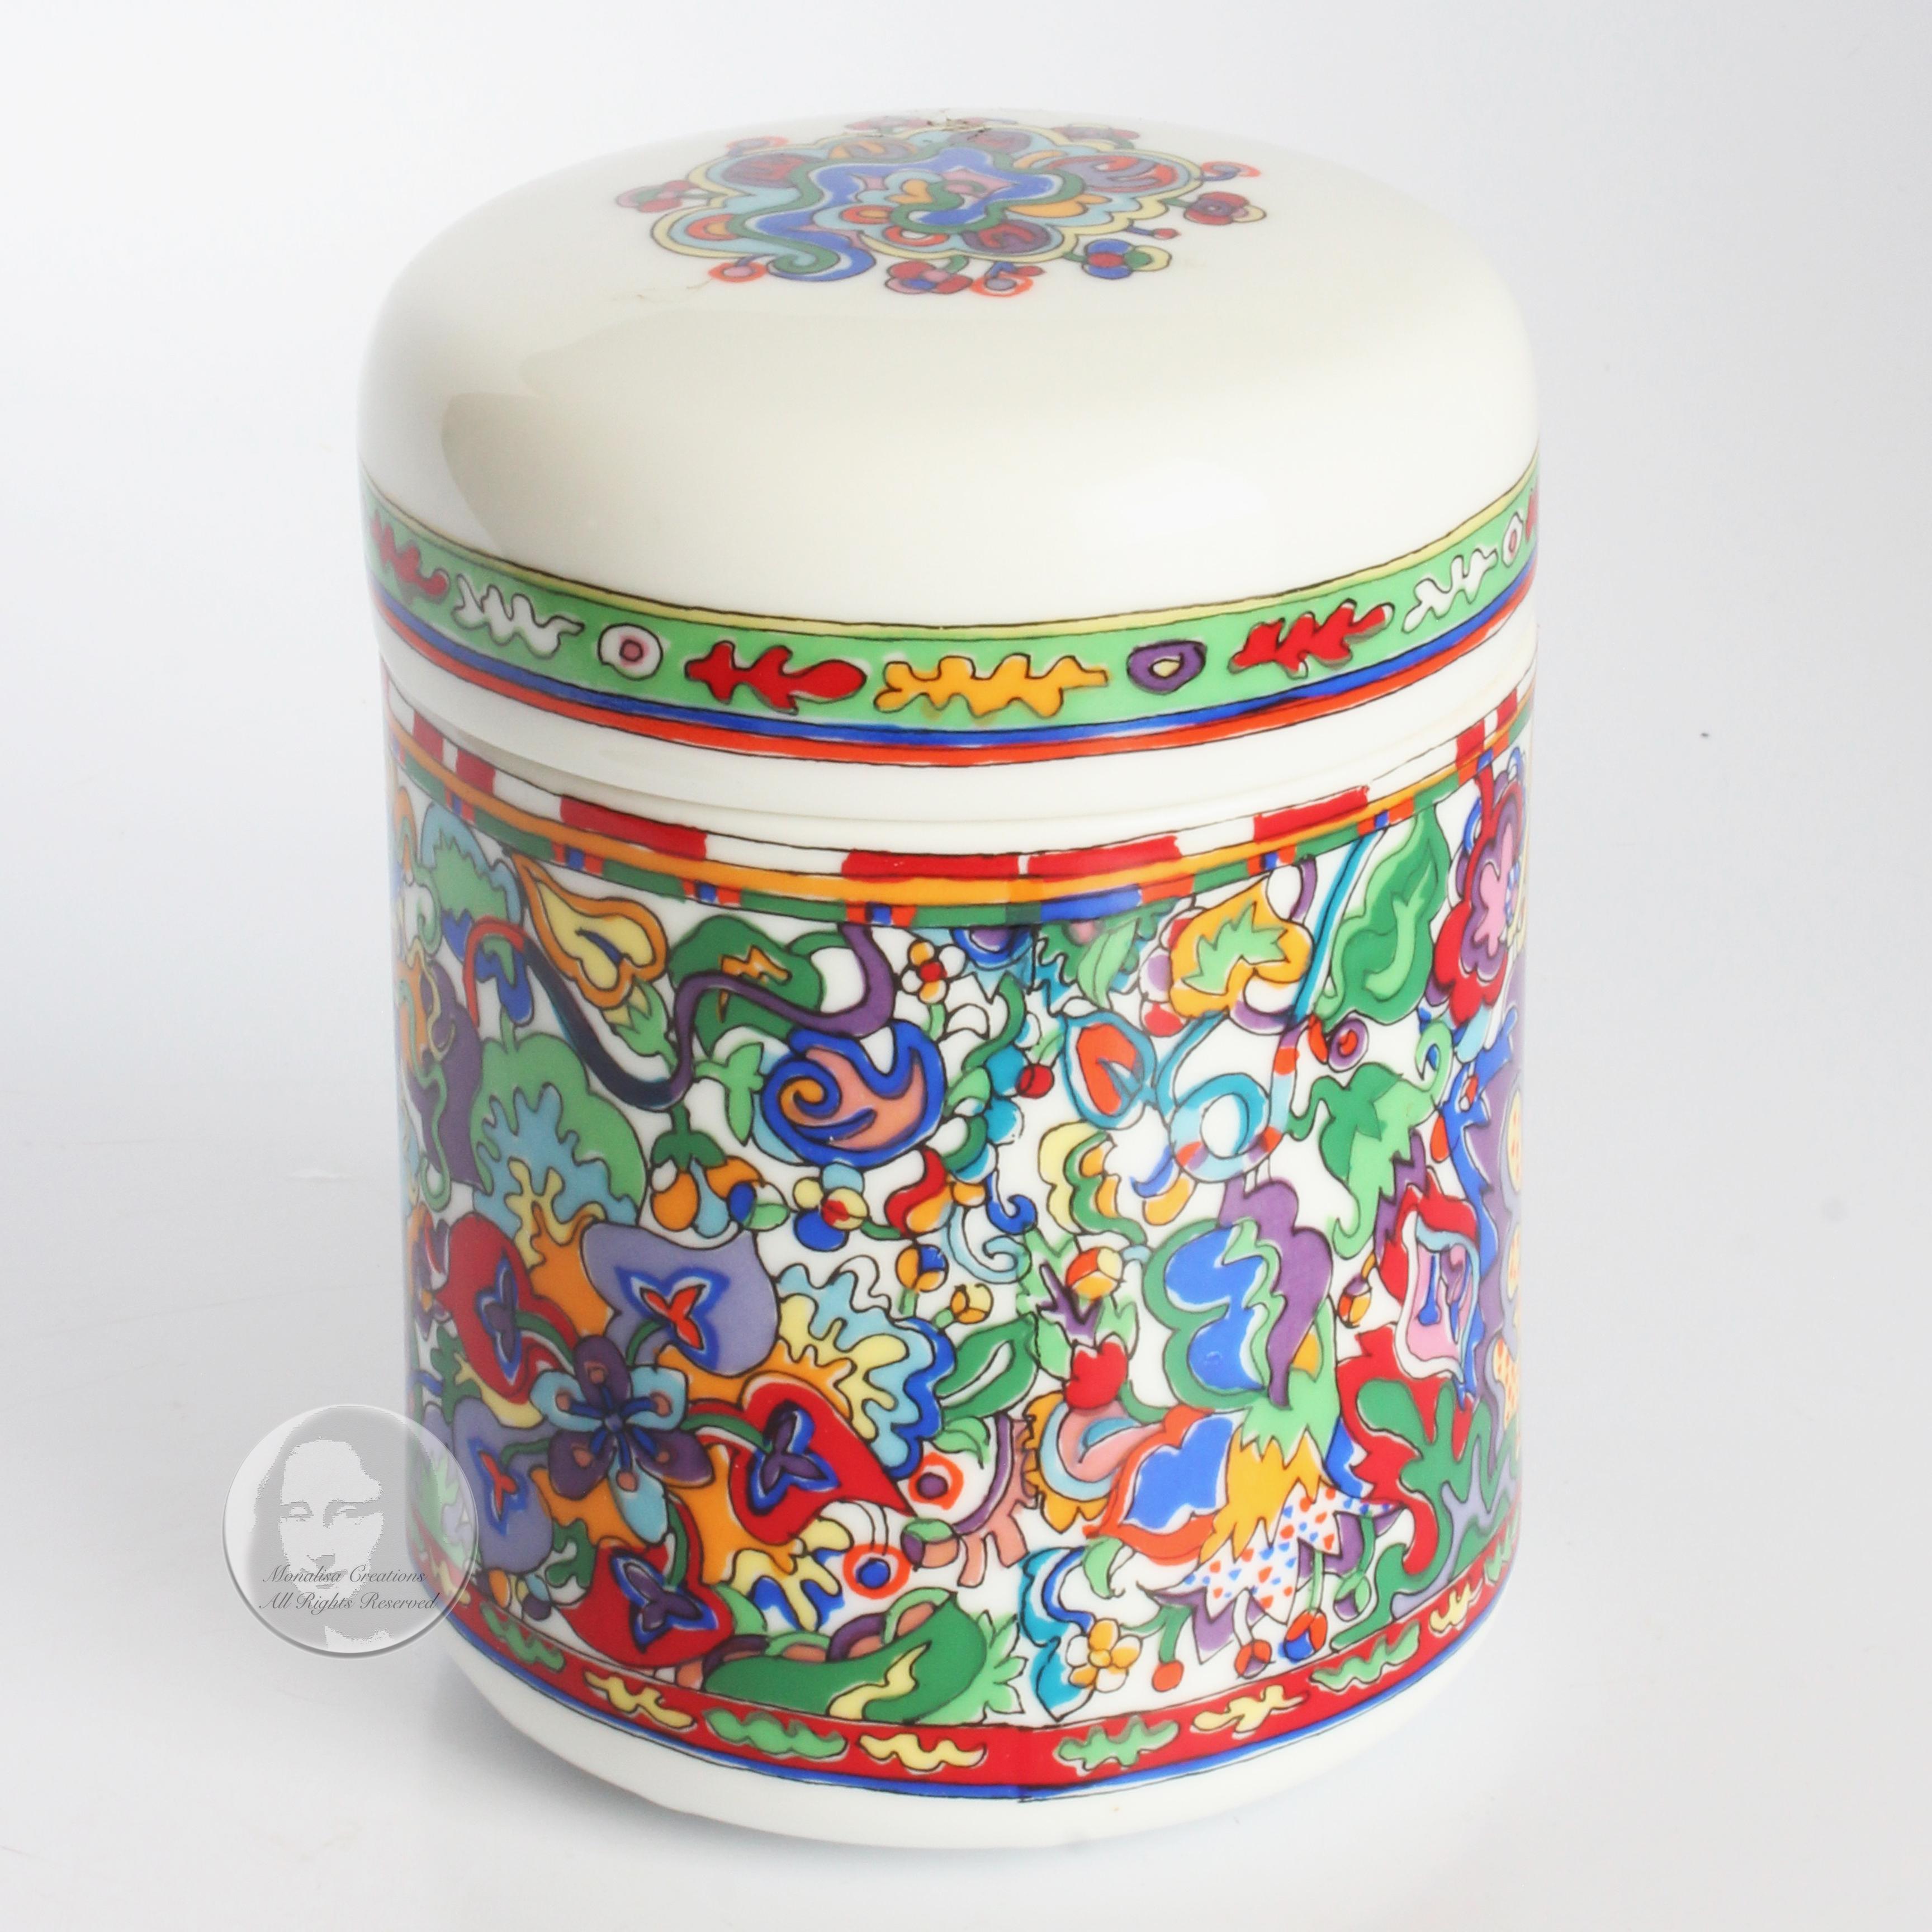 Yves Saint Laurent Parfum Rive Gauche Ceramic Vanity Jar Vintage Home Decor  1